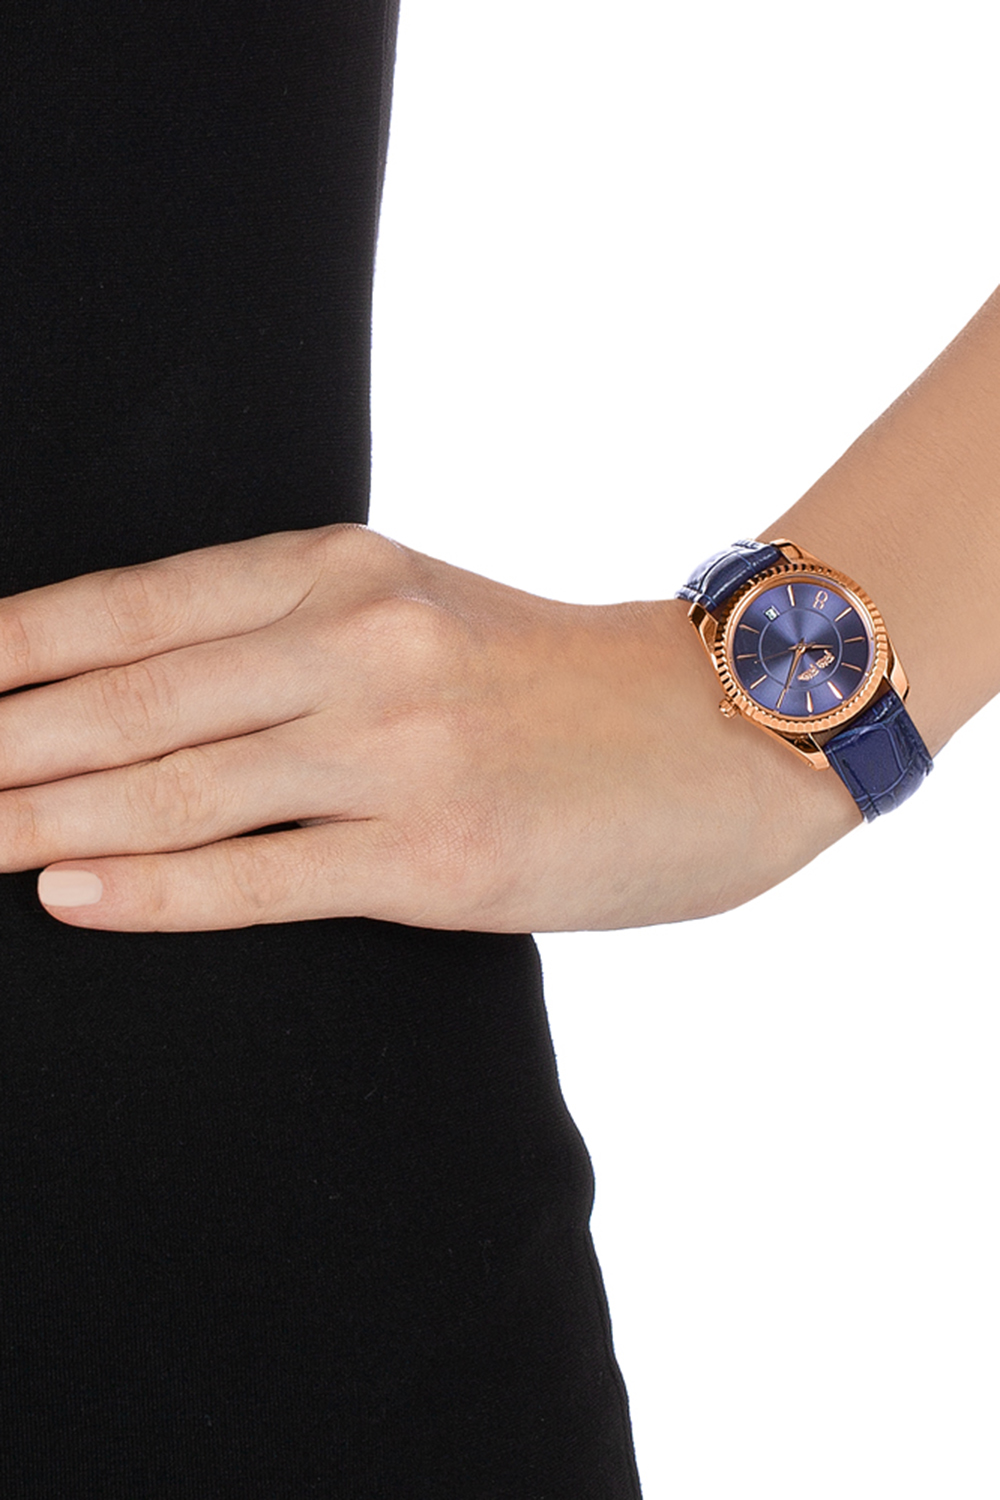 FOLLI FOLLIE – Γυναικείο ρολόι με δερμάτινο λουράκι FOLLI FOLLIE CHRONOS TALES μπλε WF18R042SDU-BL